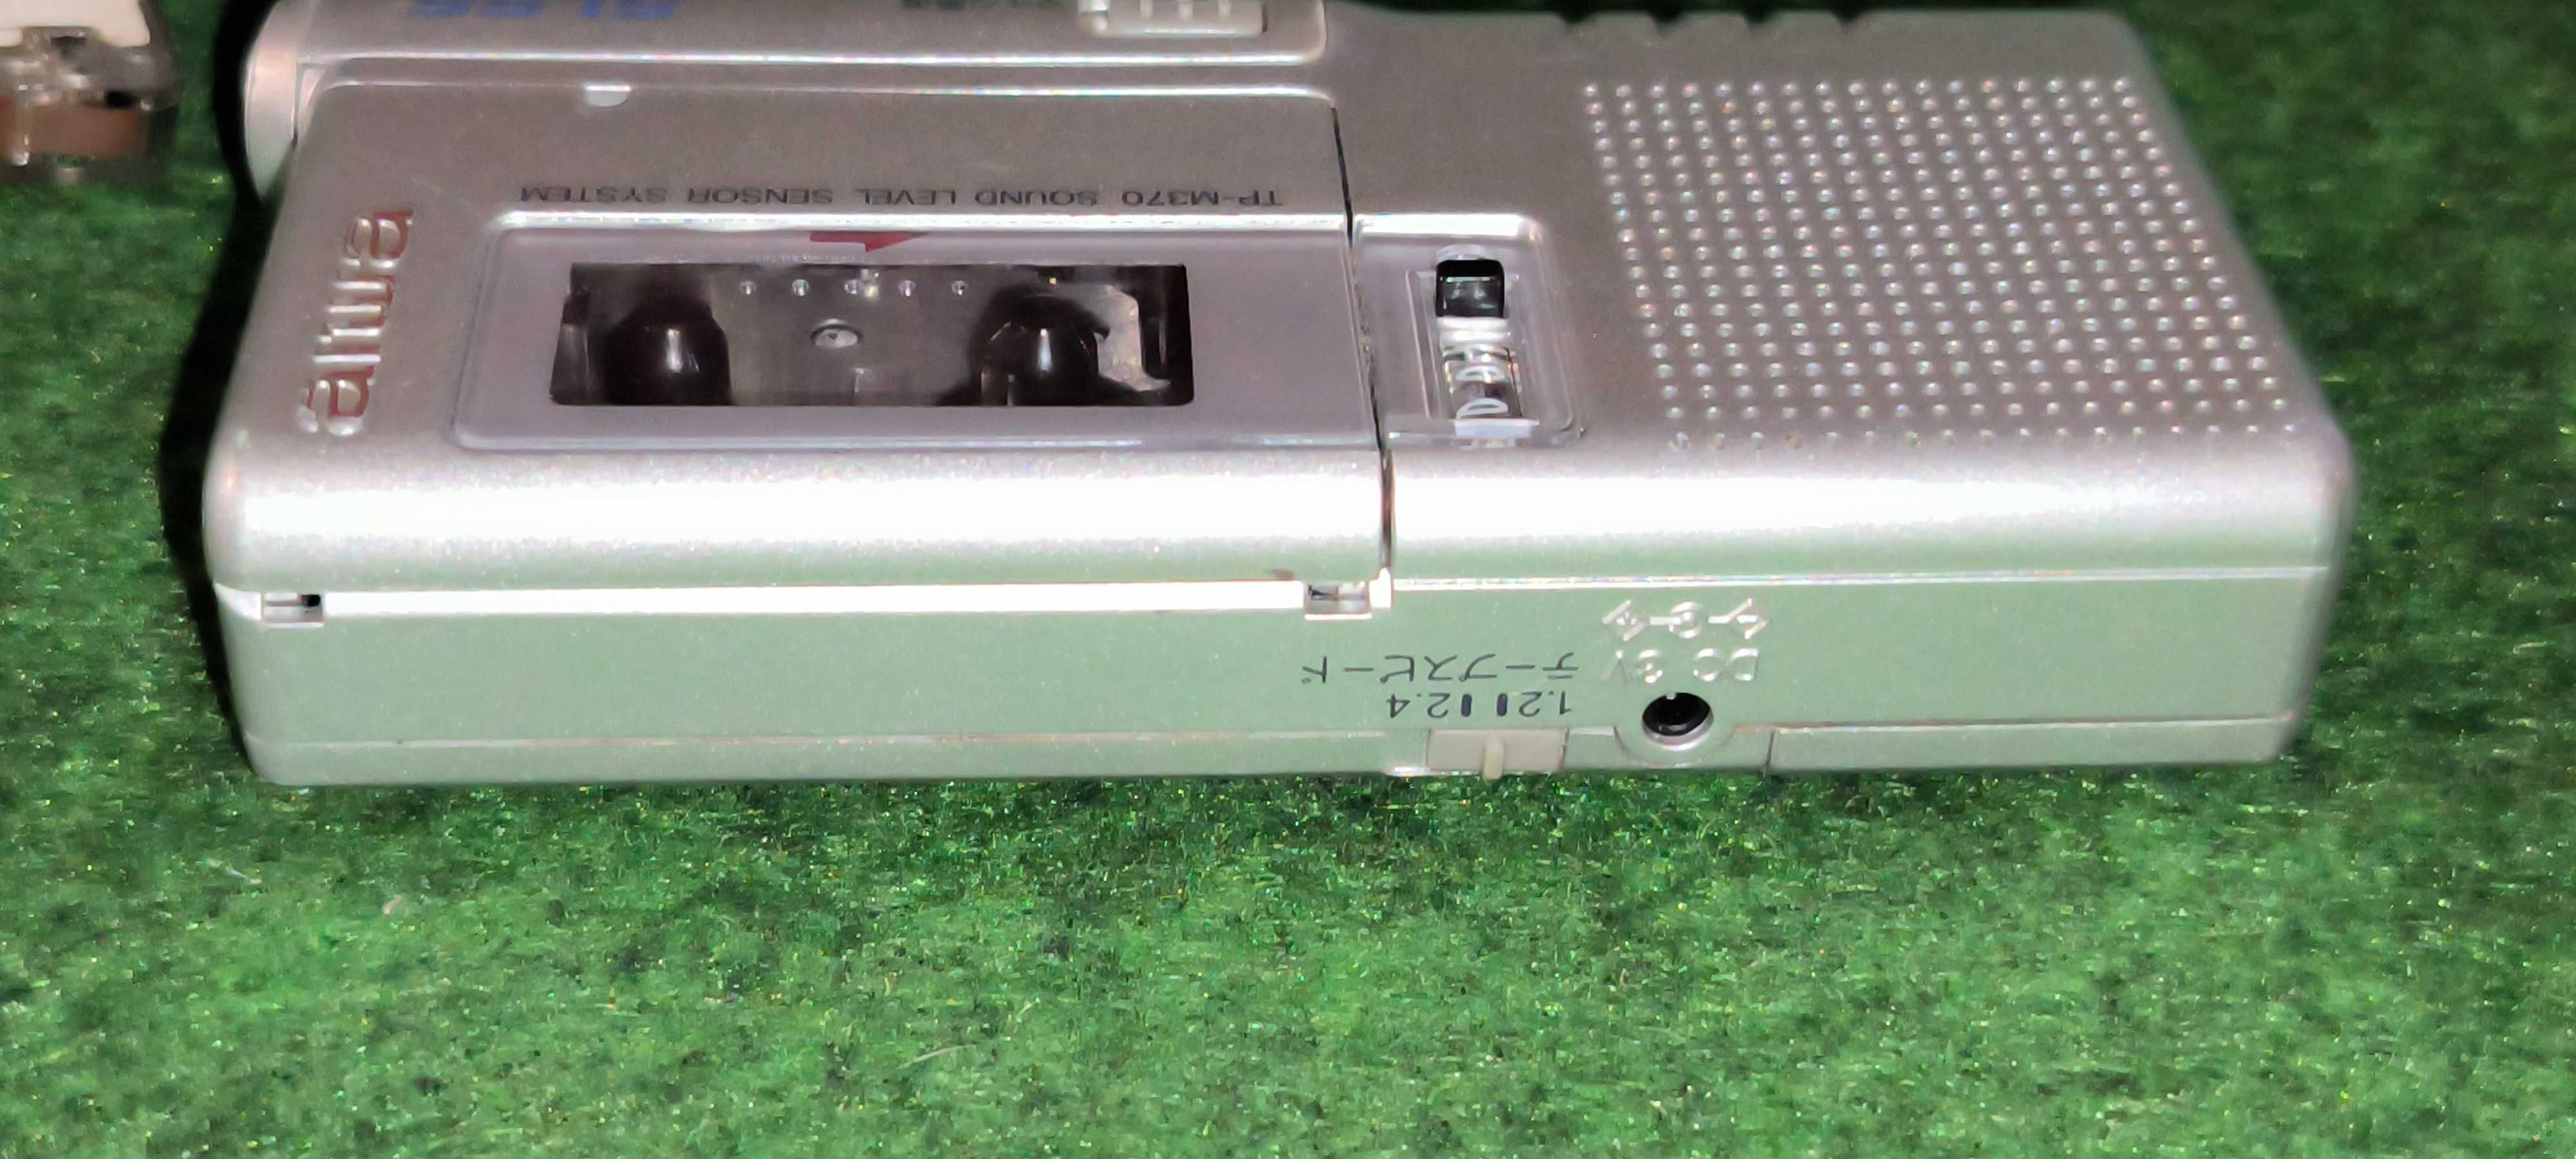 REPORTOFON
AIWA model TP - M 370
micro caseta